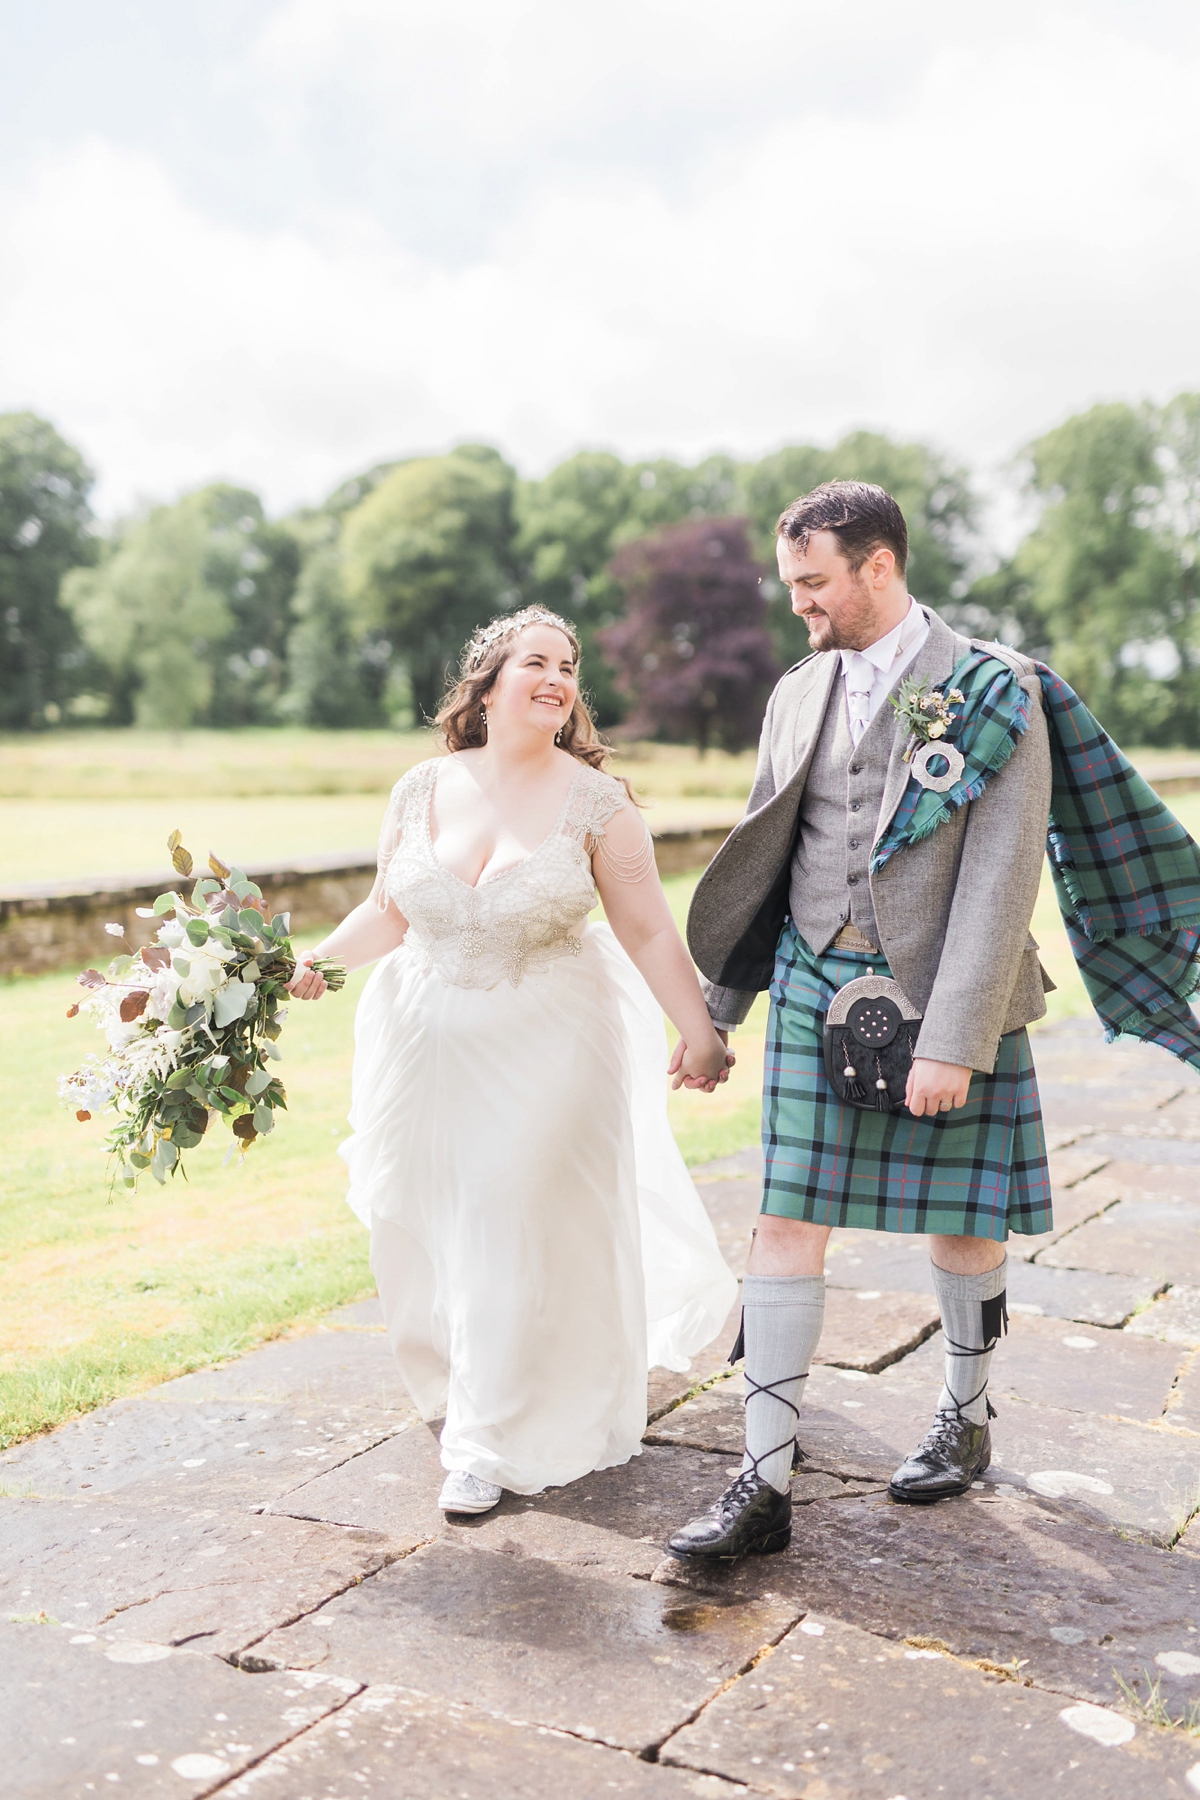 Anna Campell dress Scottish handfasting wedding 29